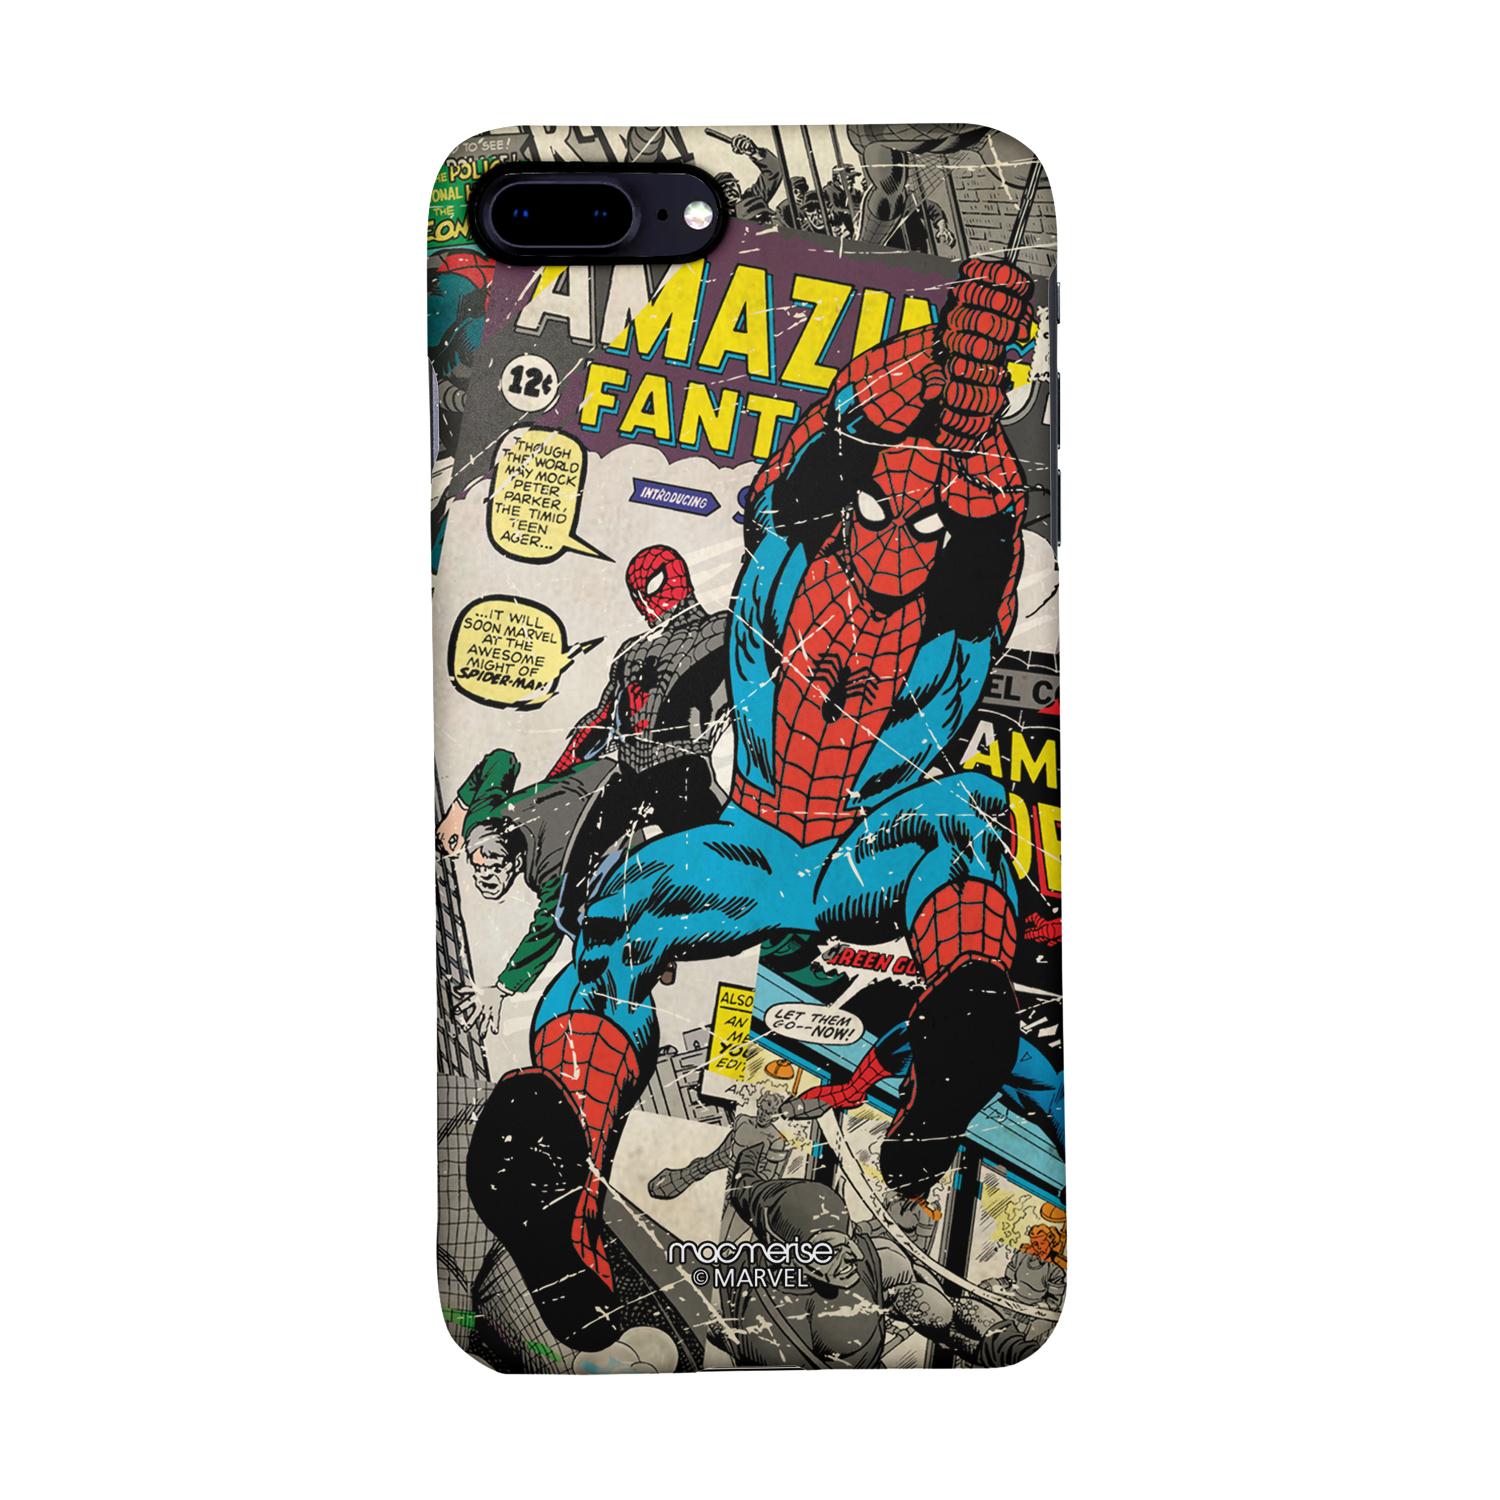 Buy Comic Spidey - Sleek Phone Case for iPhone 8 Plus Online